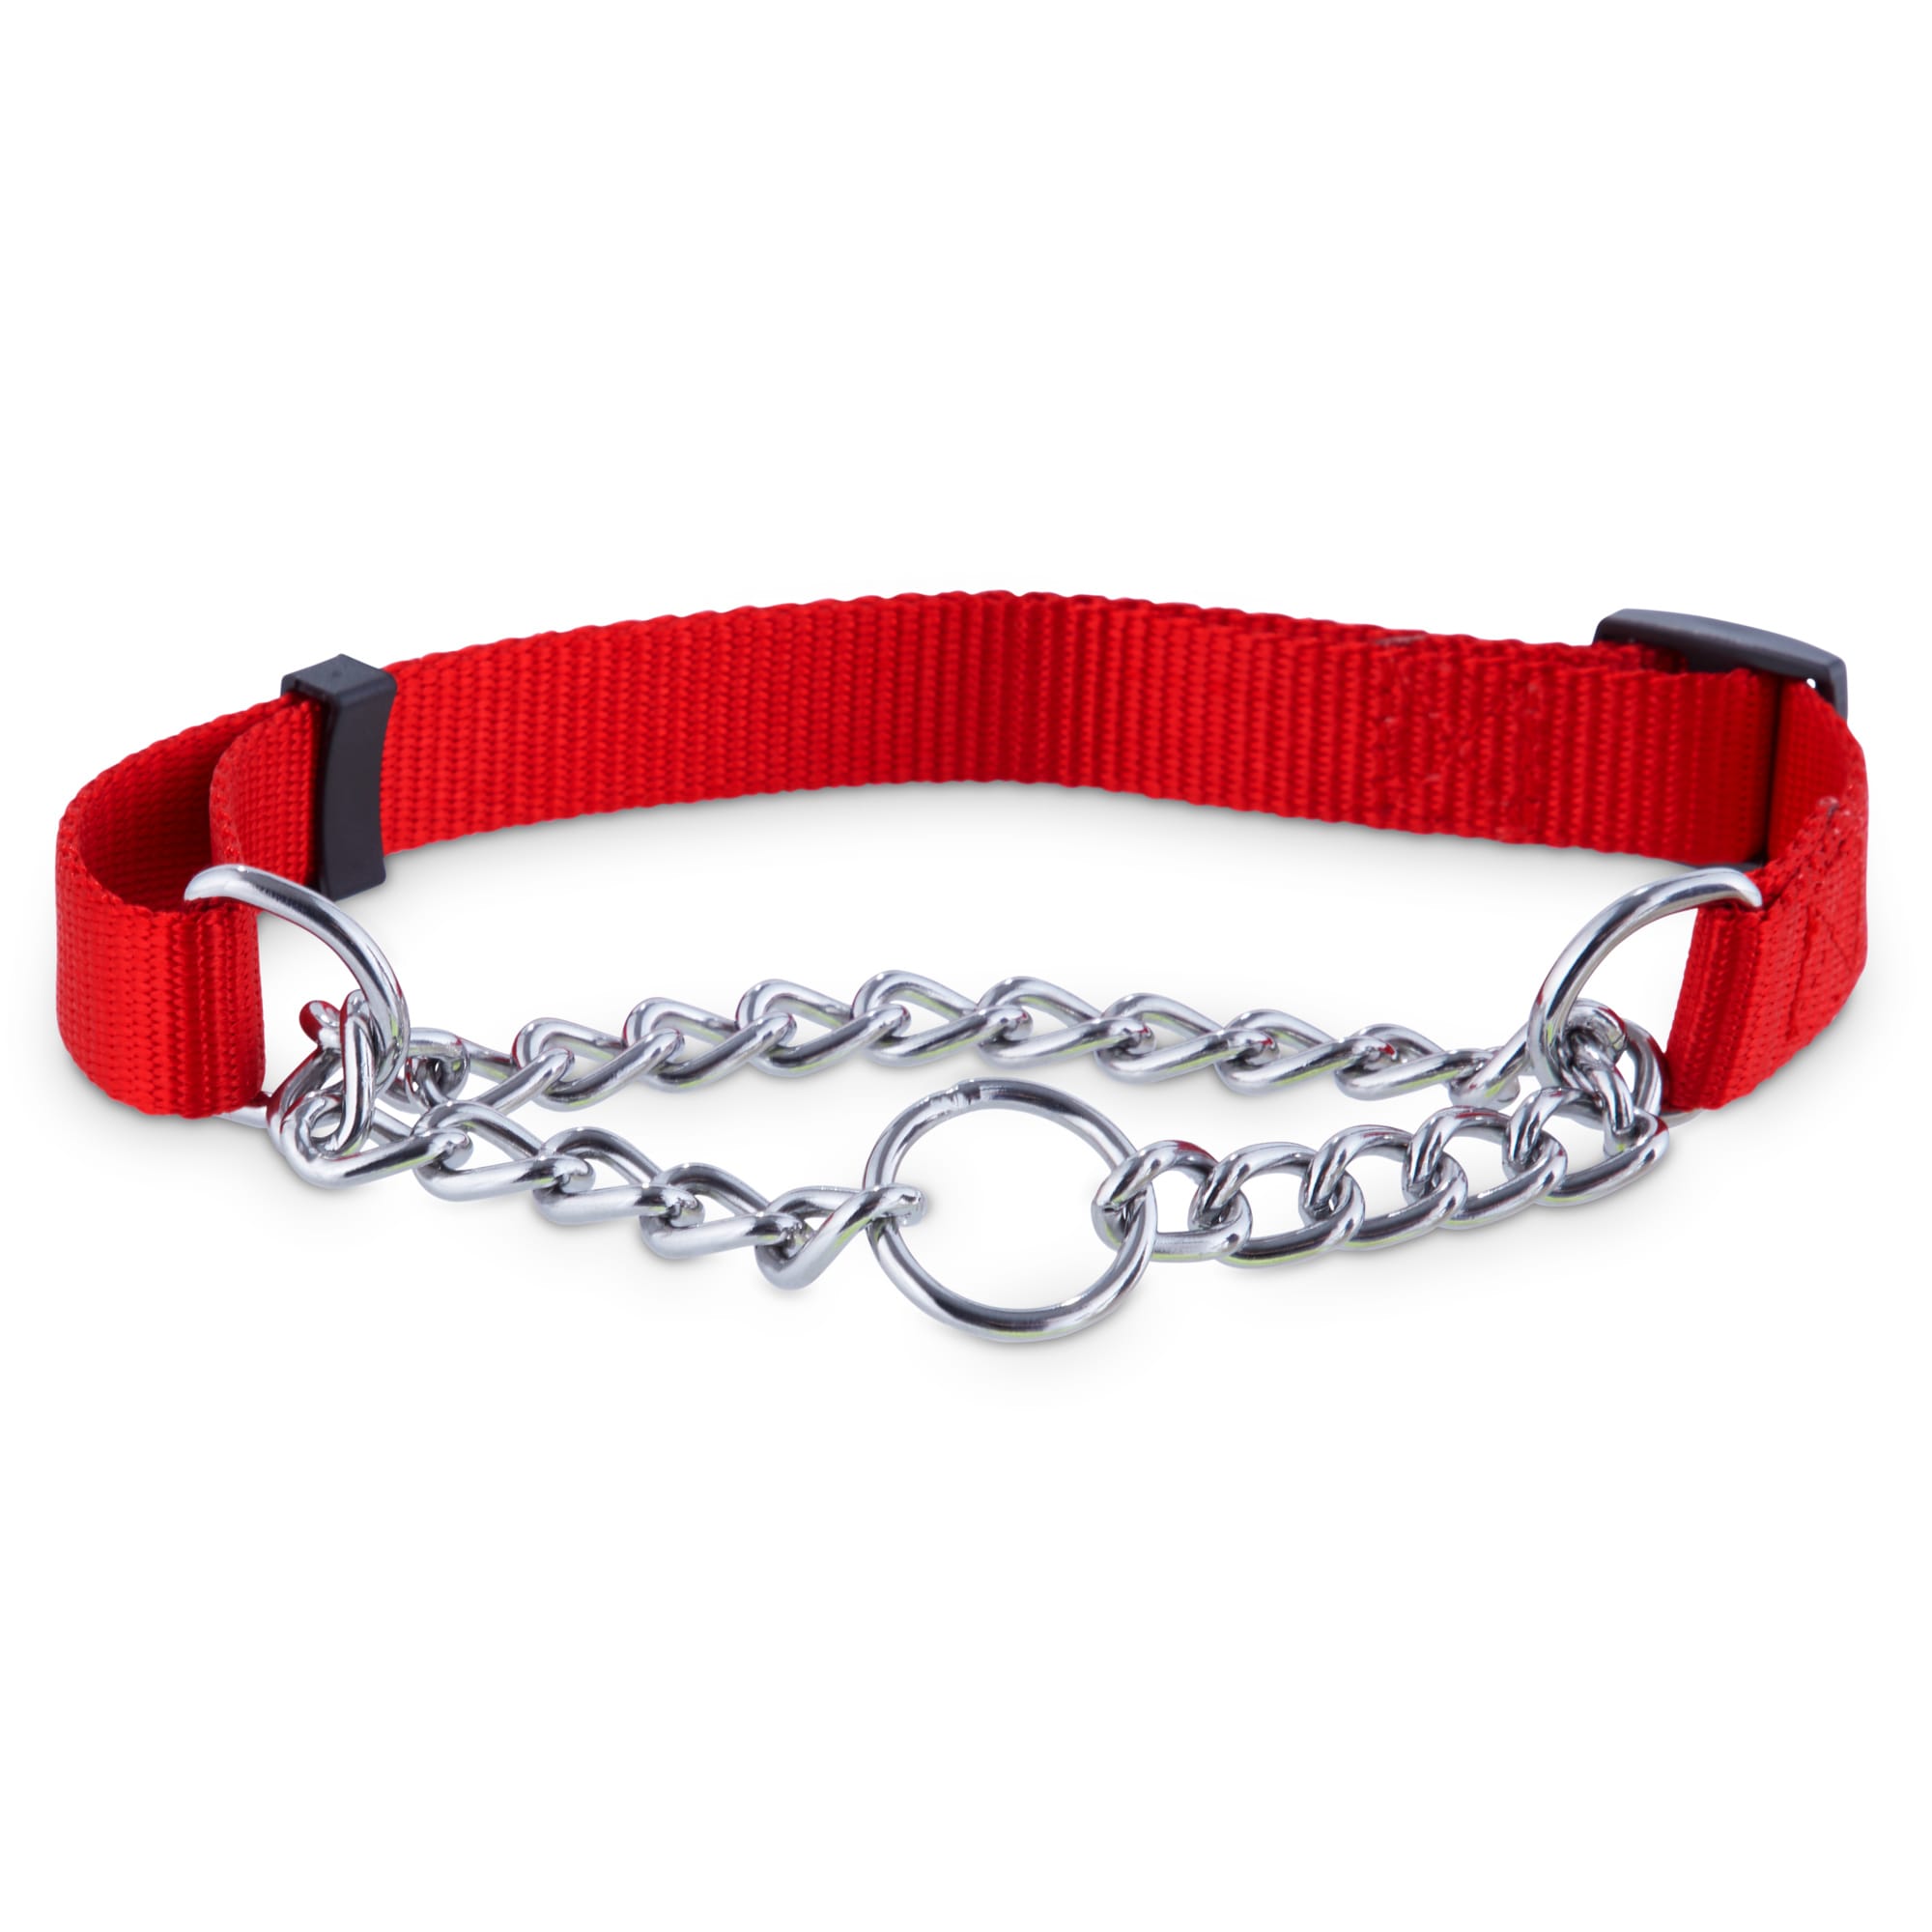 Red Check Nylon and Chain Dog Collar 